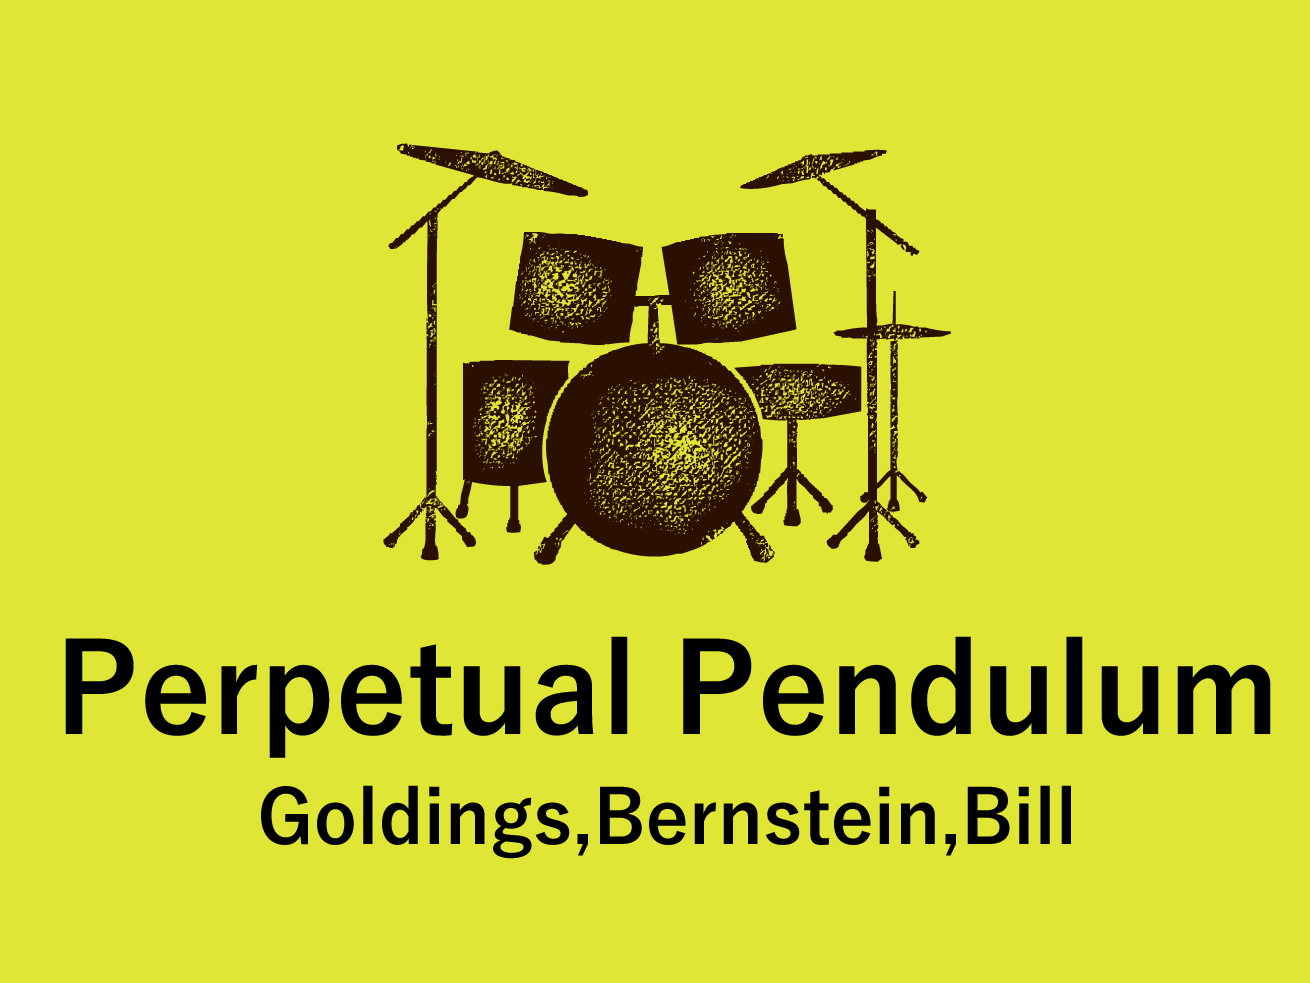 Perpetual Pendulum